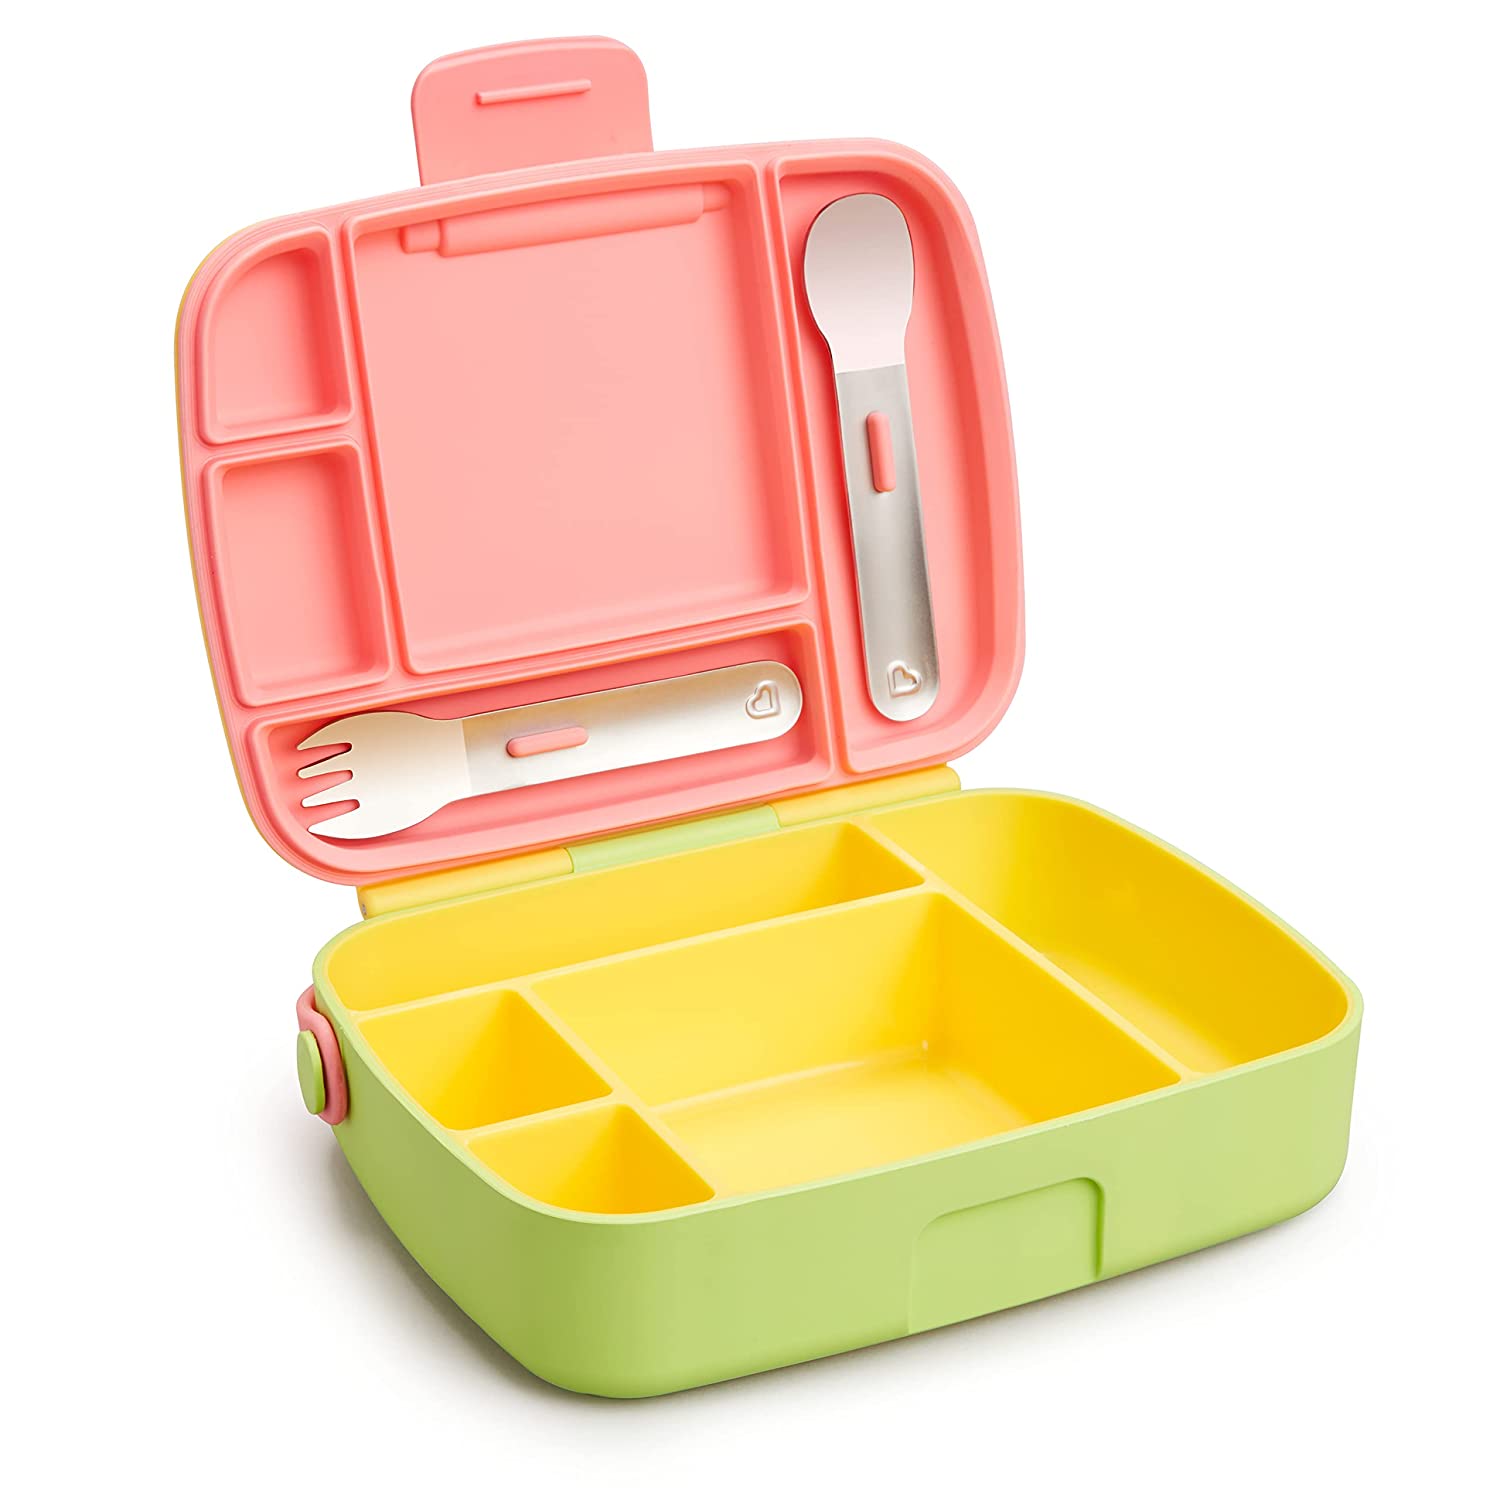 https://www.dontwasteyourmoney.com/wp-content/uploads/2020/09/munchkin-bento-box-toddler-lunch-box.jpg